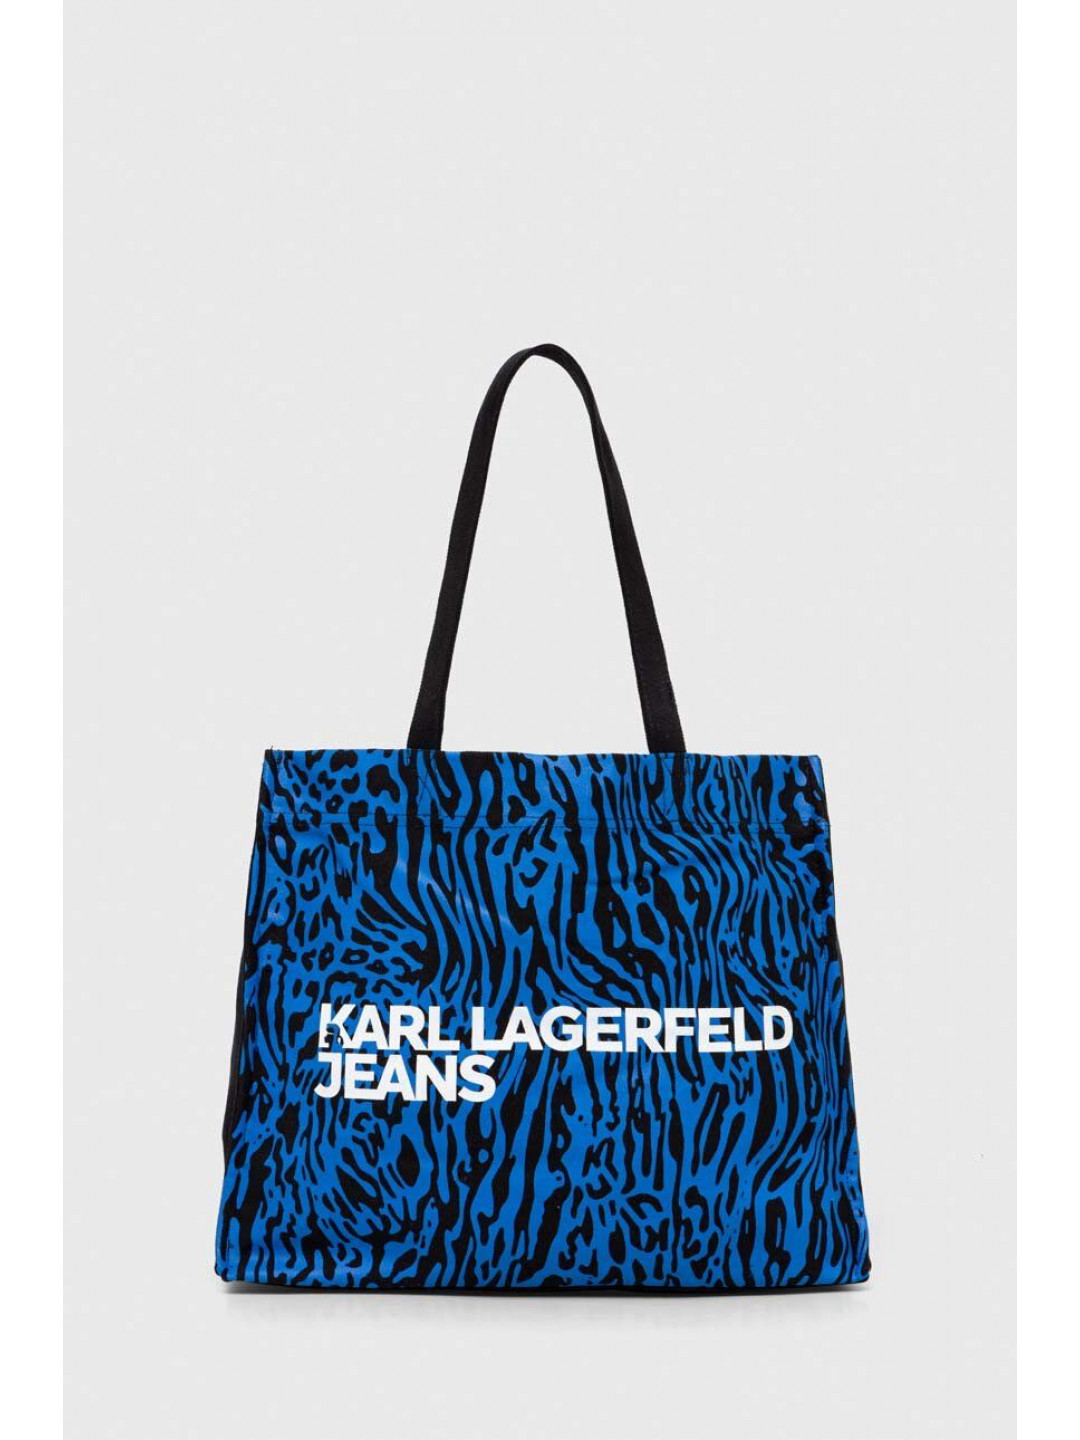 Bavlněná kabelka Karl Lagerfeld Jeans tmavomodrá barva